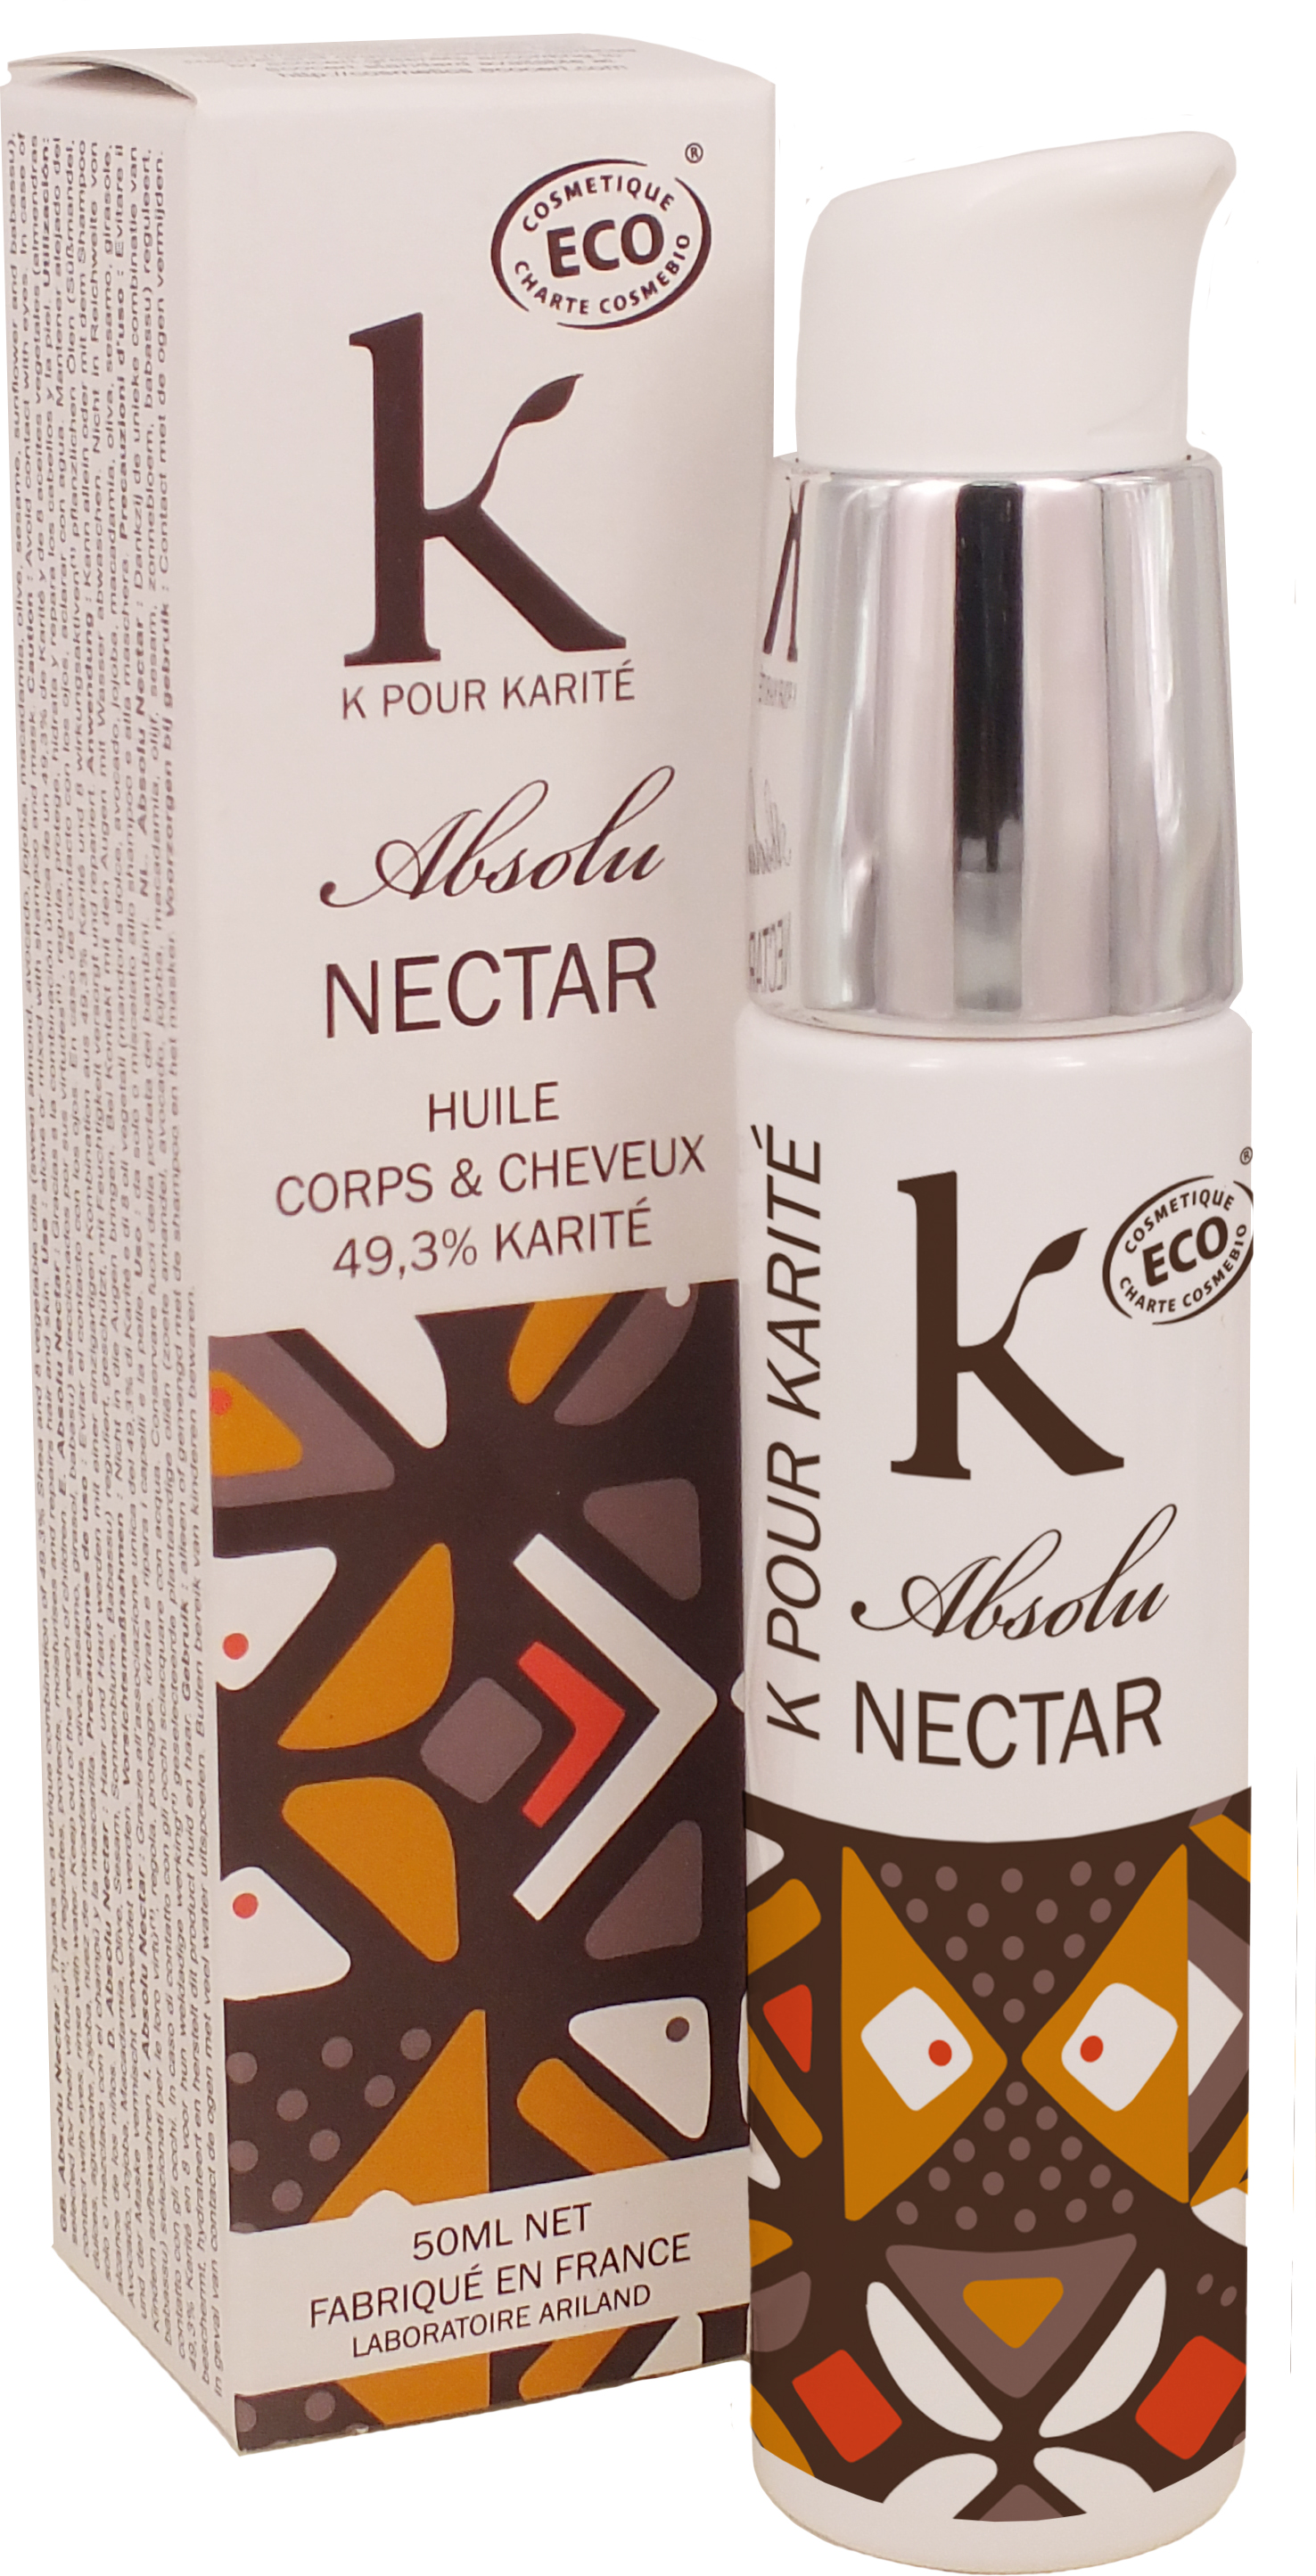 K Pour Karité Ecologic Nectar Shea Oil 50ml